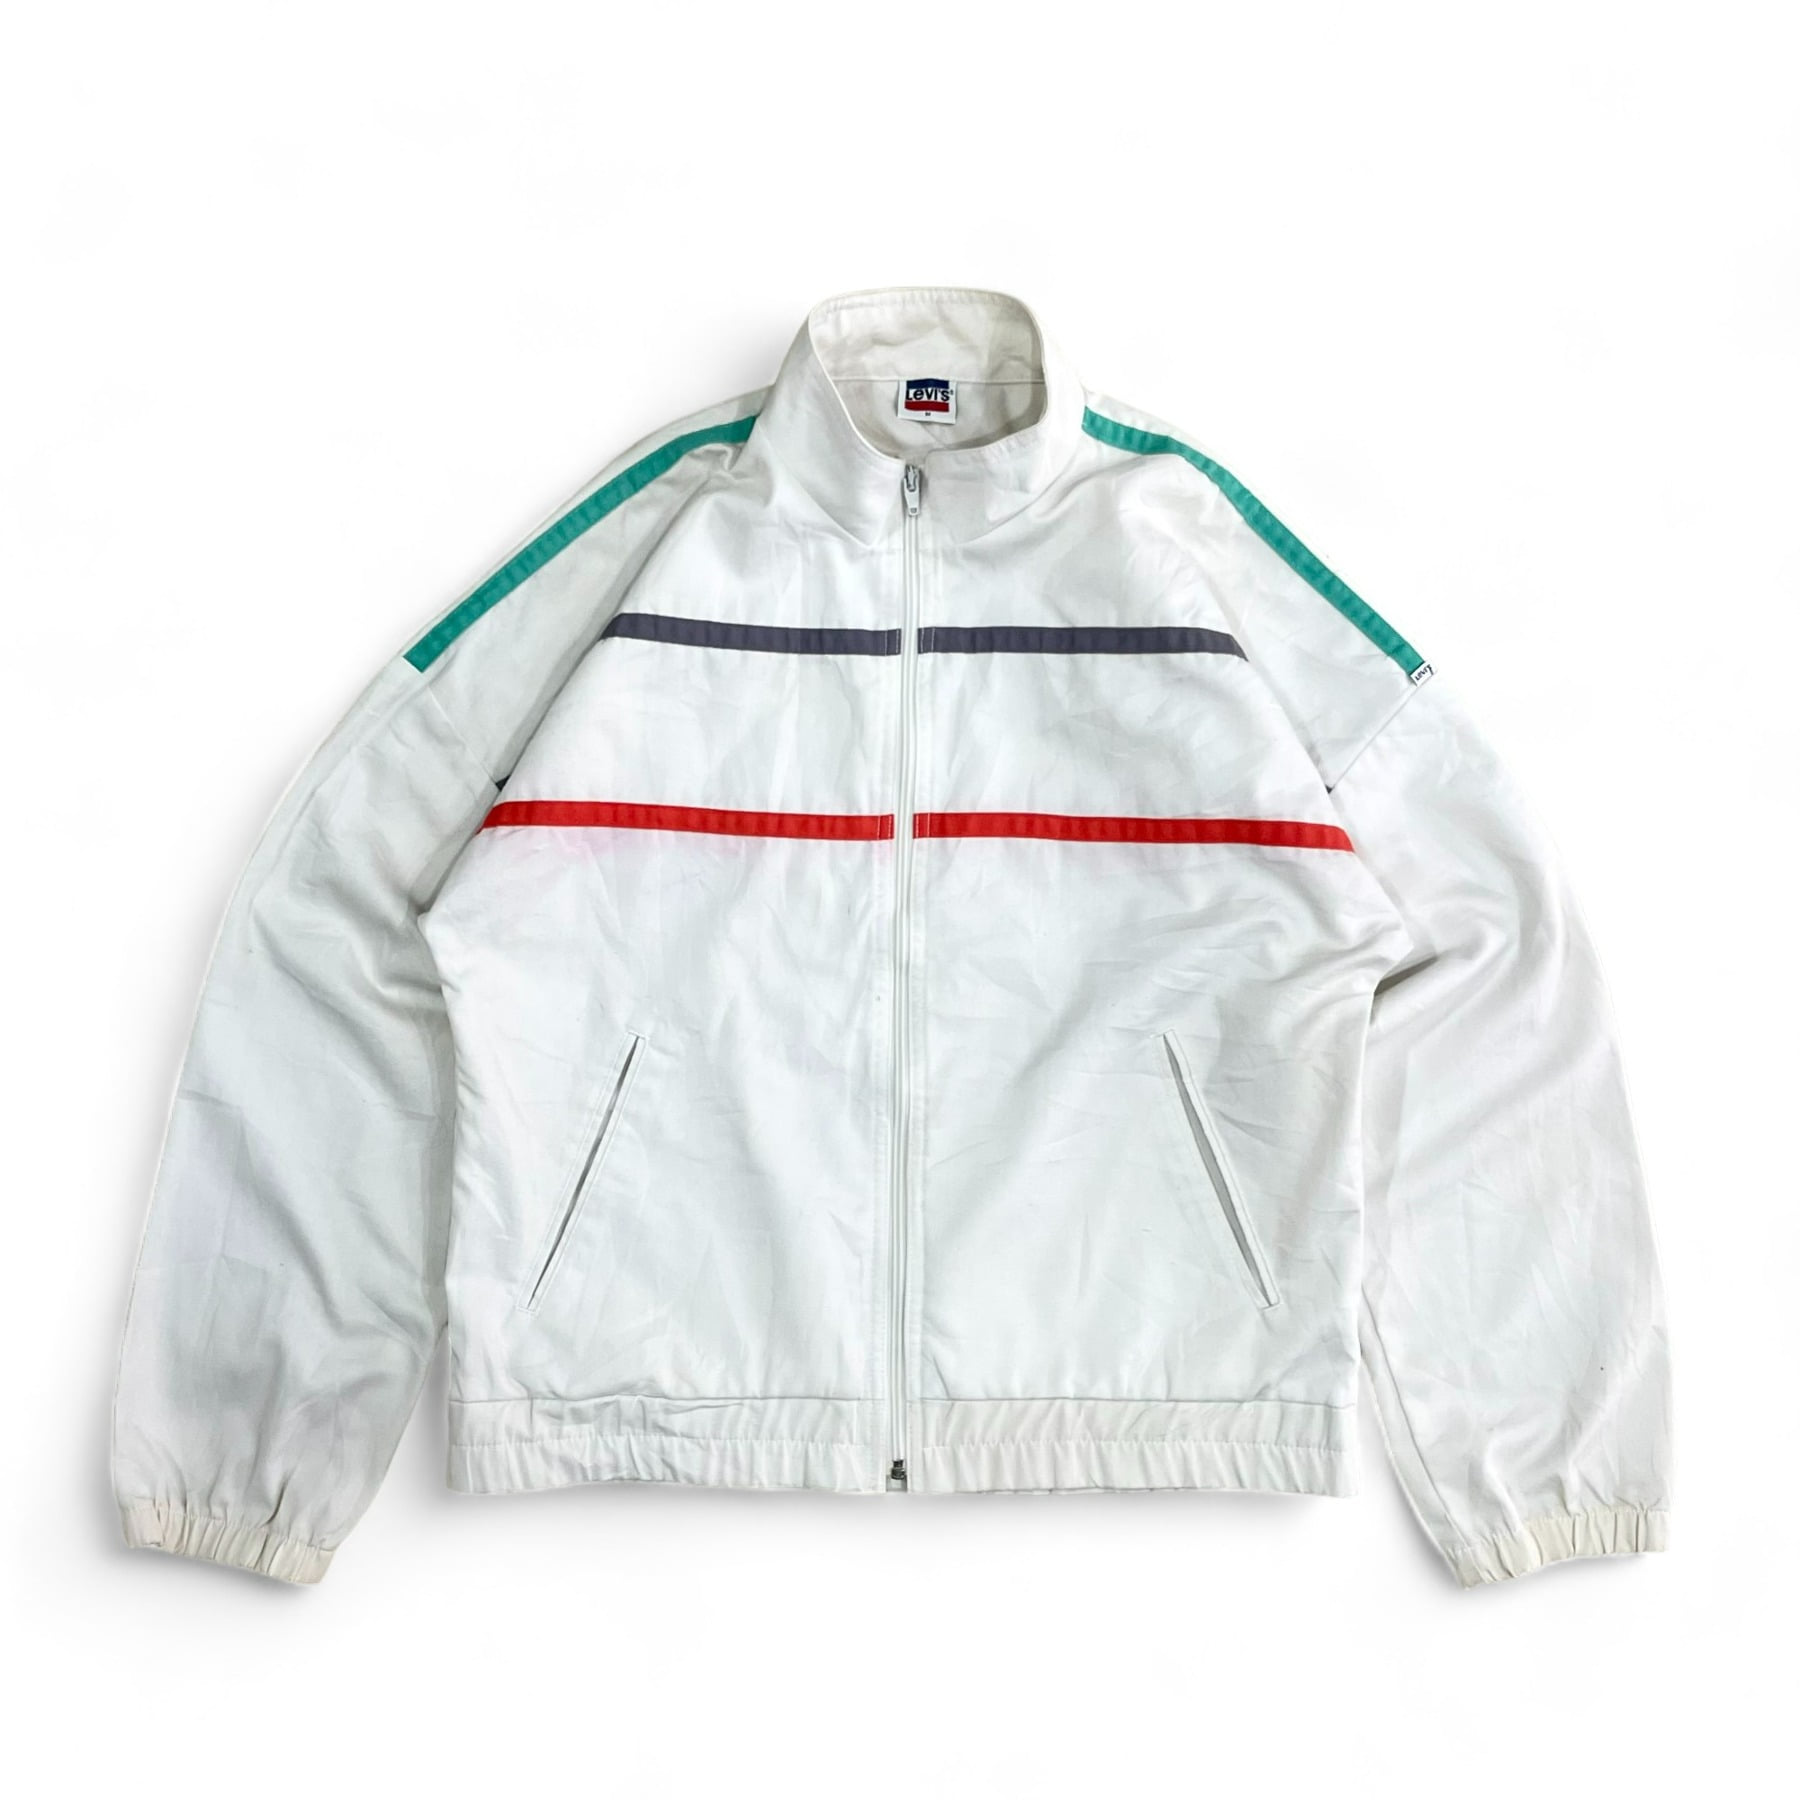 Vintage Levis Jacket (Made in USA) - M